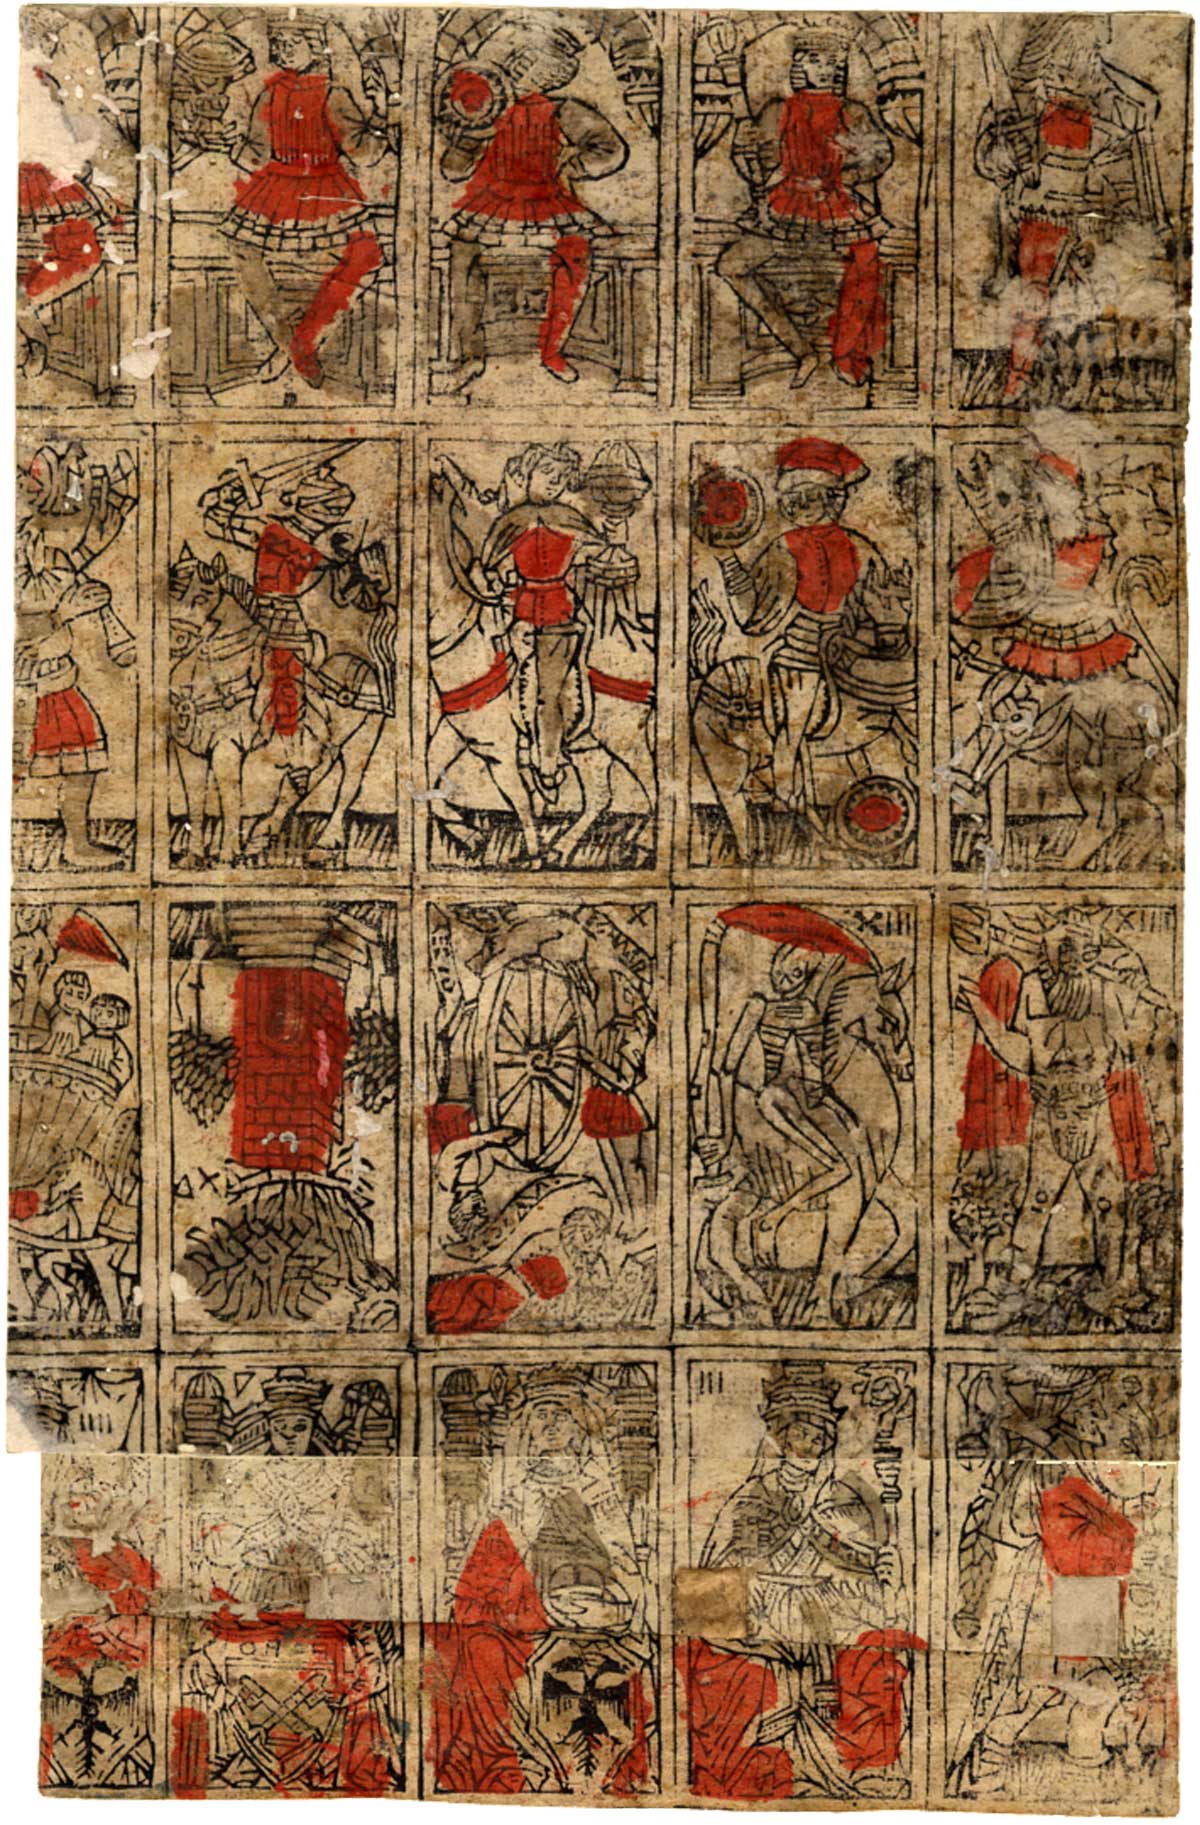 Early form of north Italian tarot cards